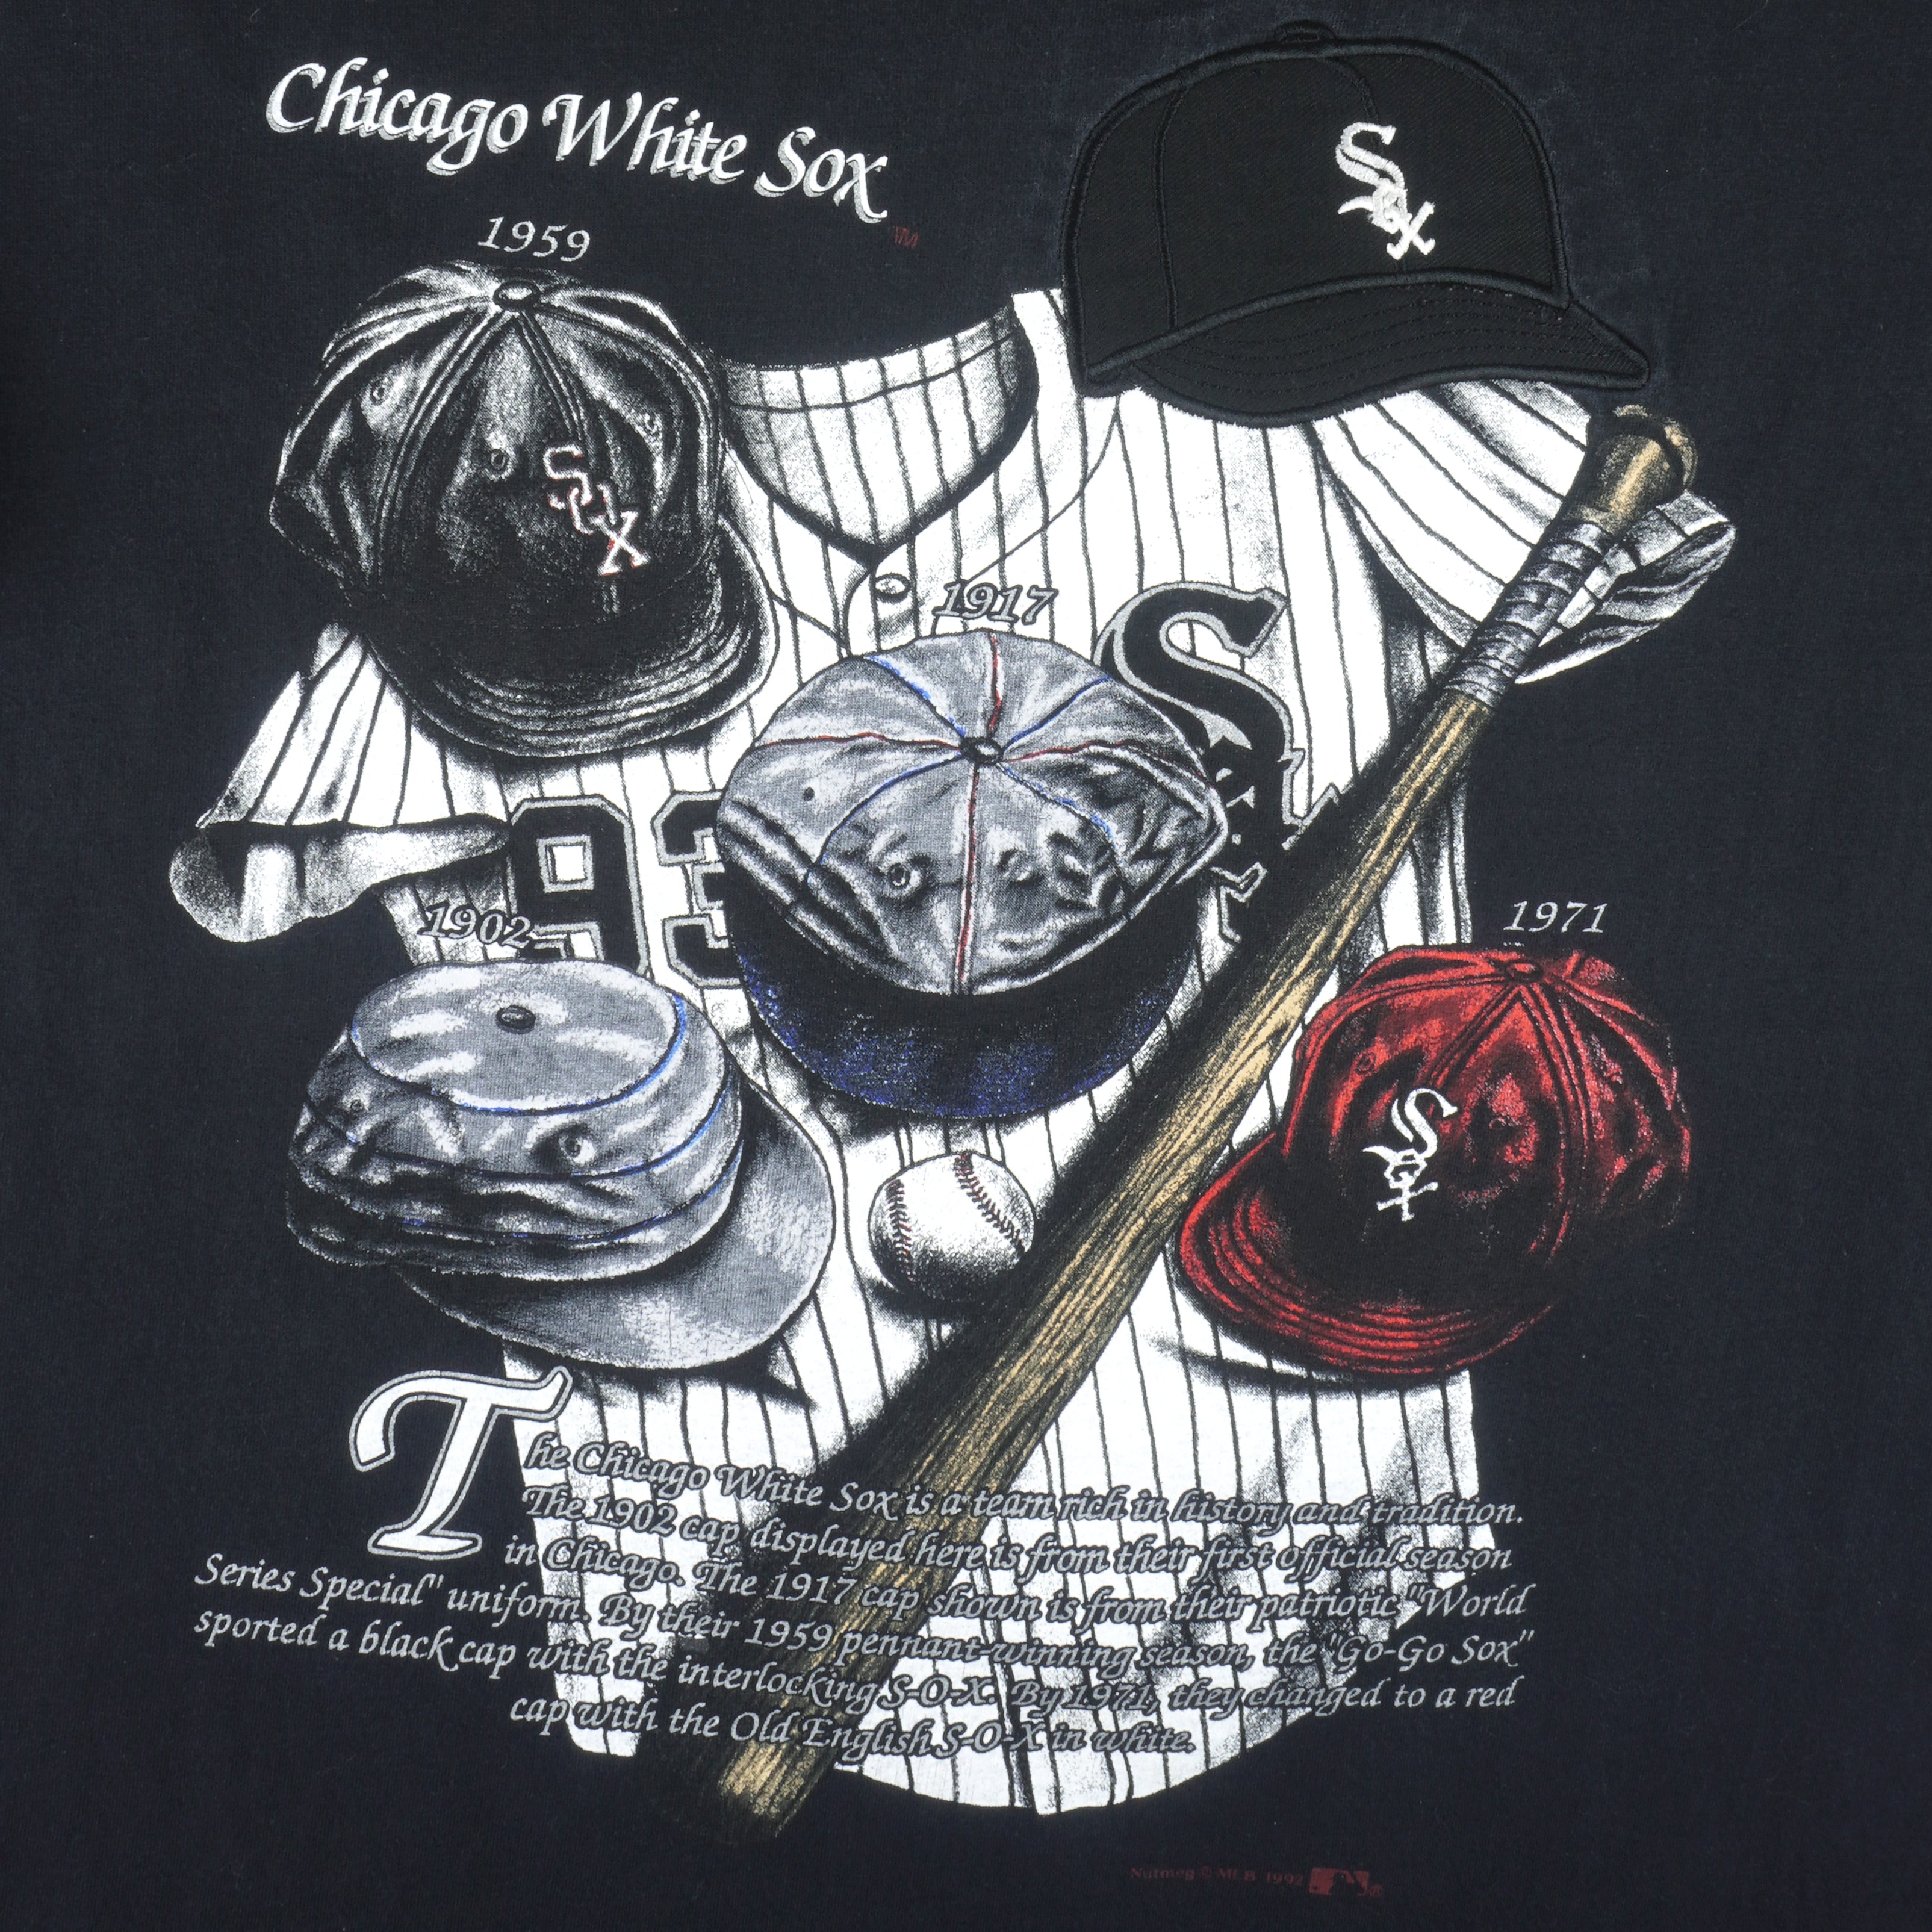 Vintage MLB Chicago White Sox Jersey